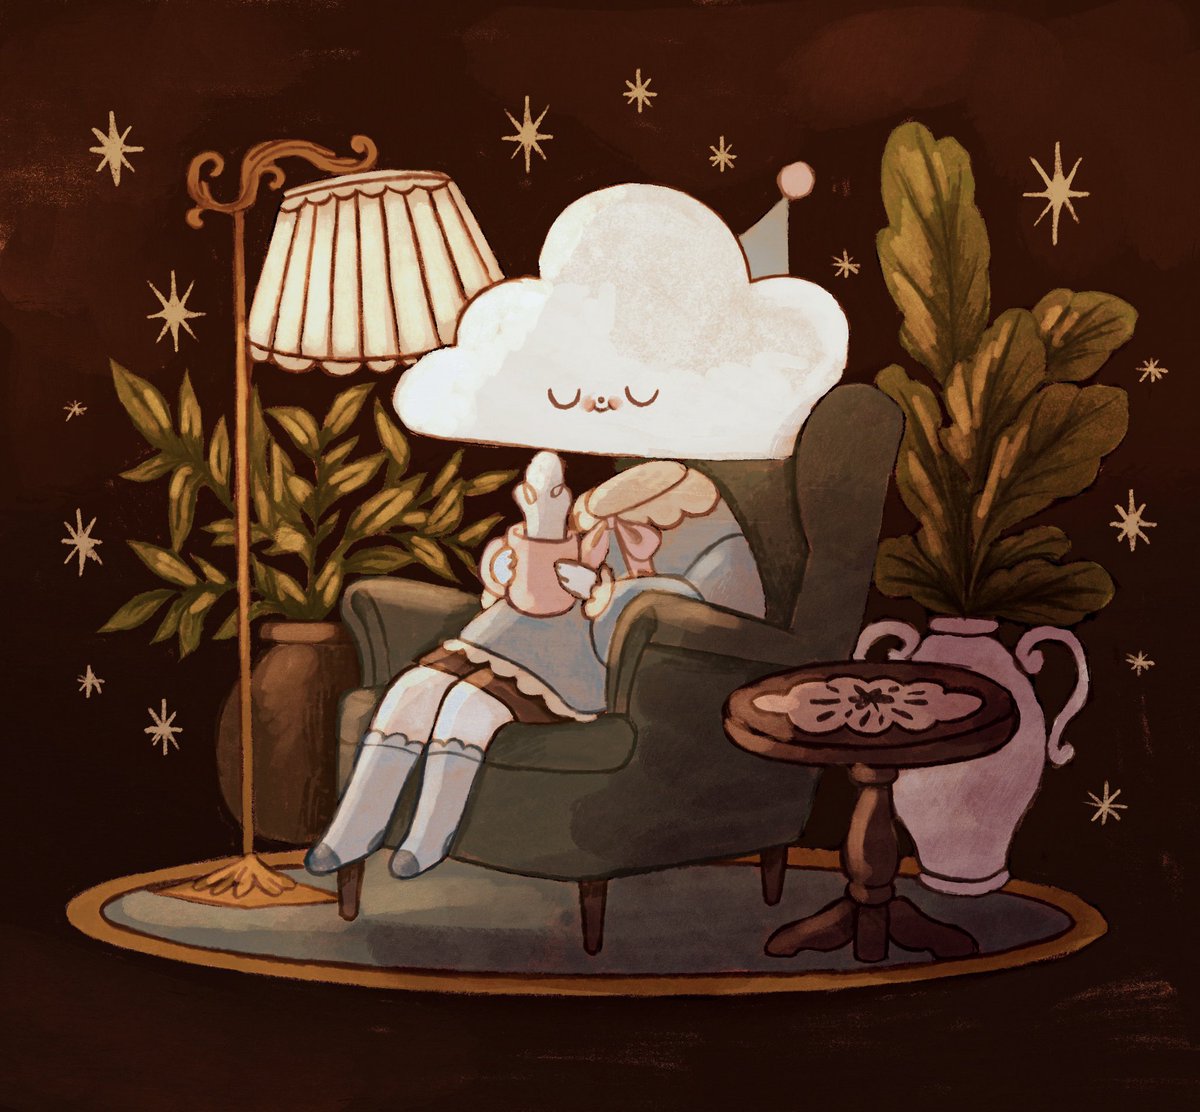 「Sleepy Cloud  」|🍓 lanylevendula 🍄 @ Megacon A348のイラスト